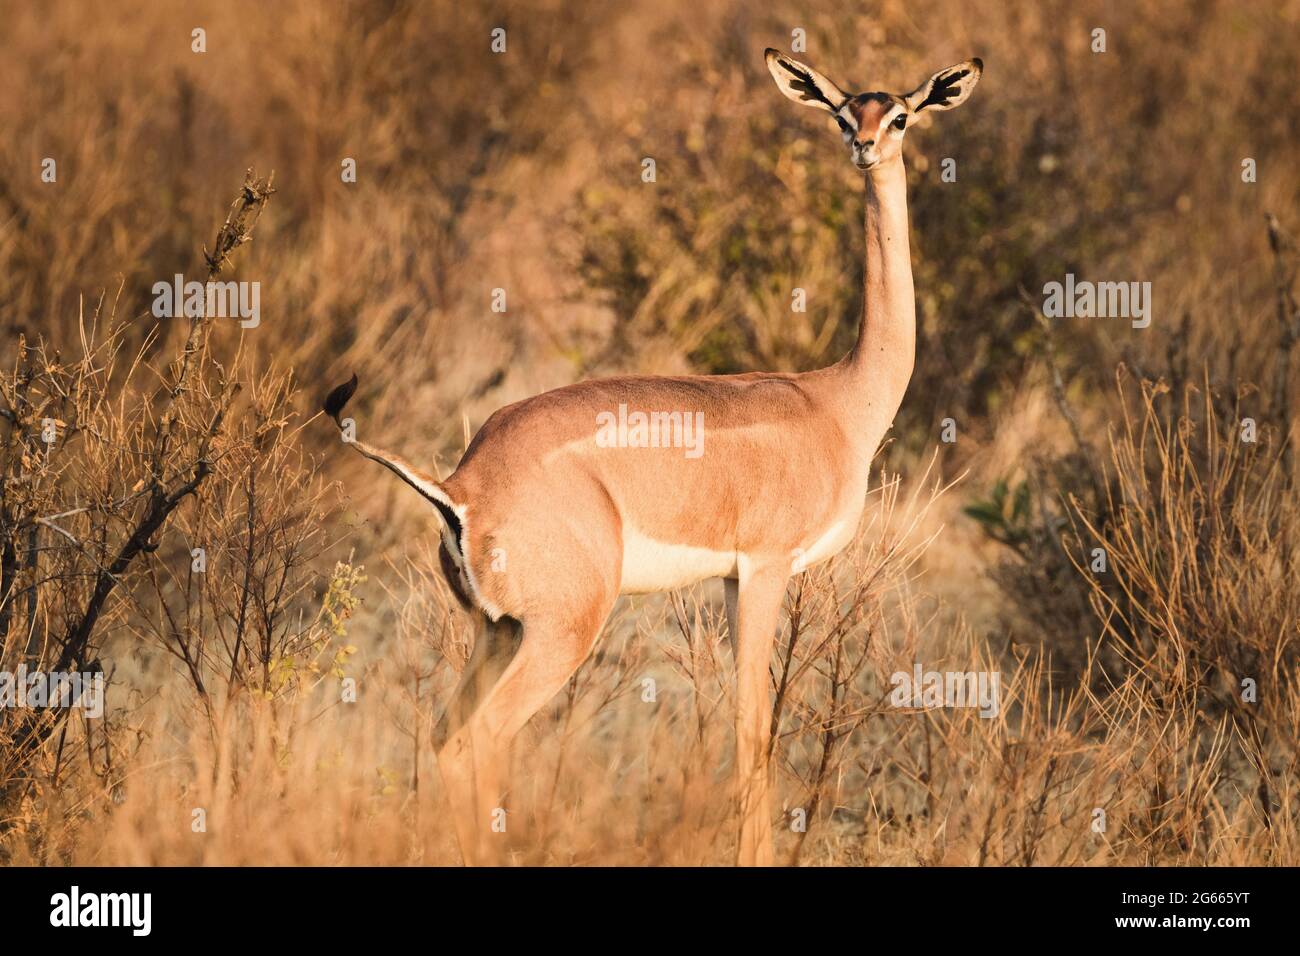 Animals in the wild - Gerenuk antelope in Samburu National Reserve, North Kenya, Africa Stock Photo